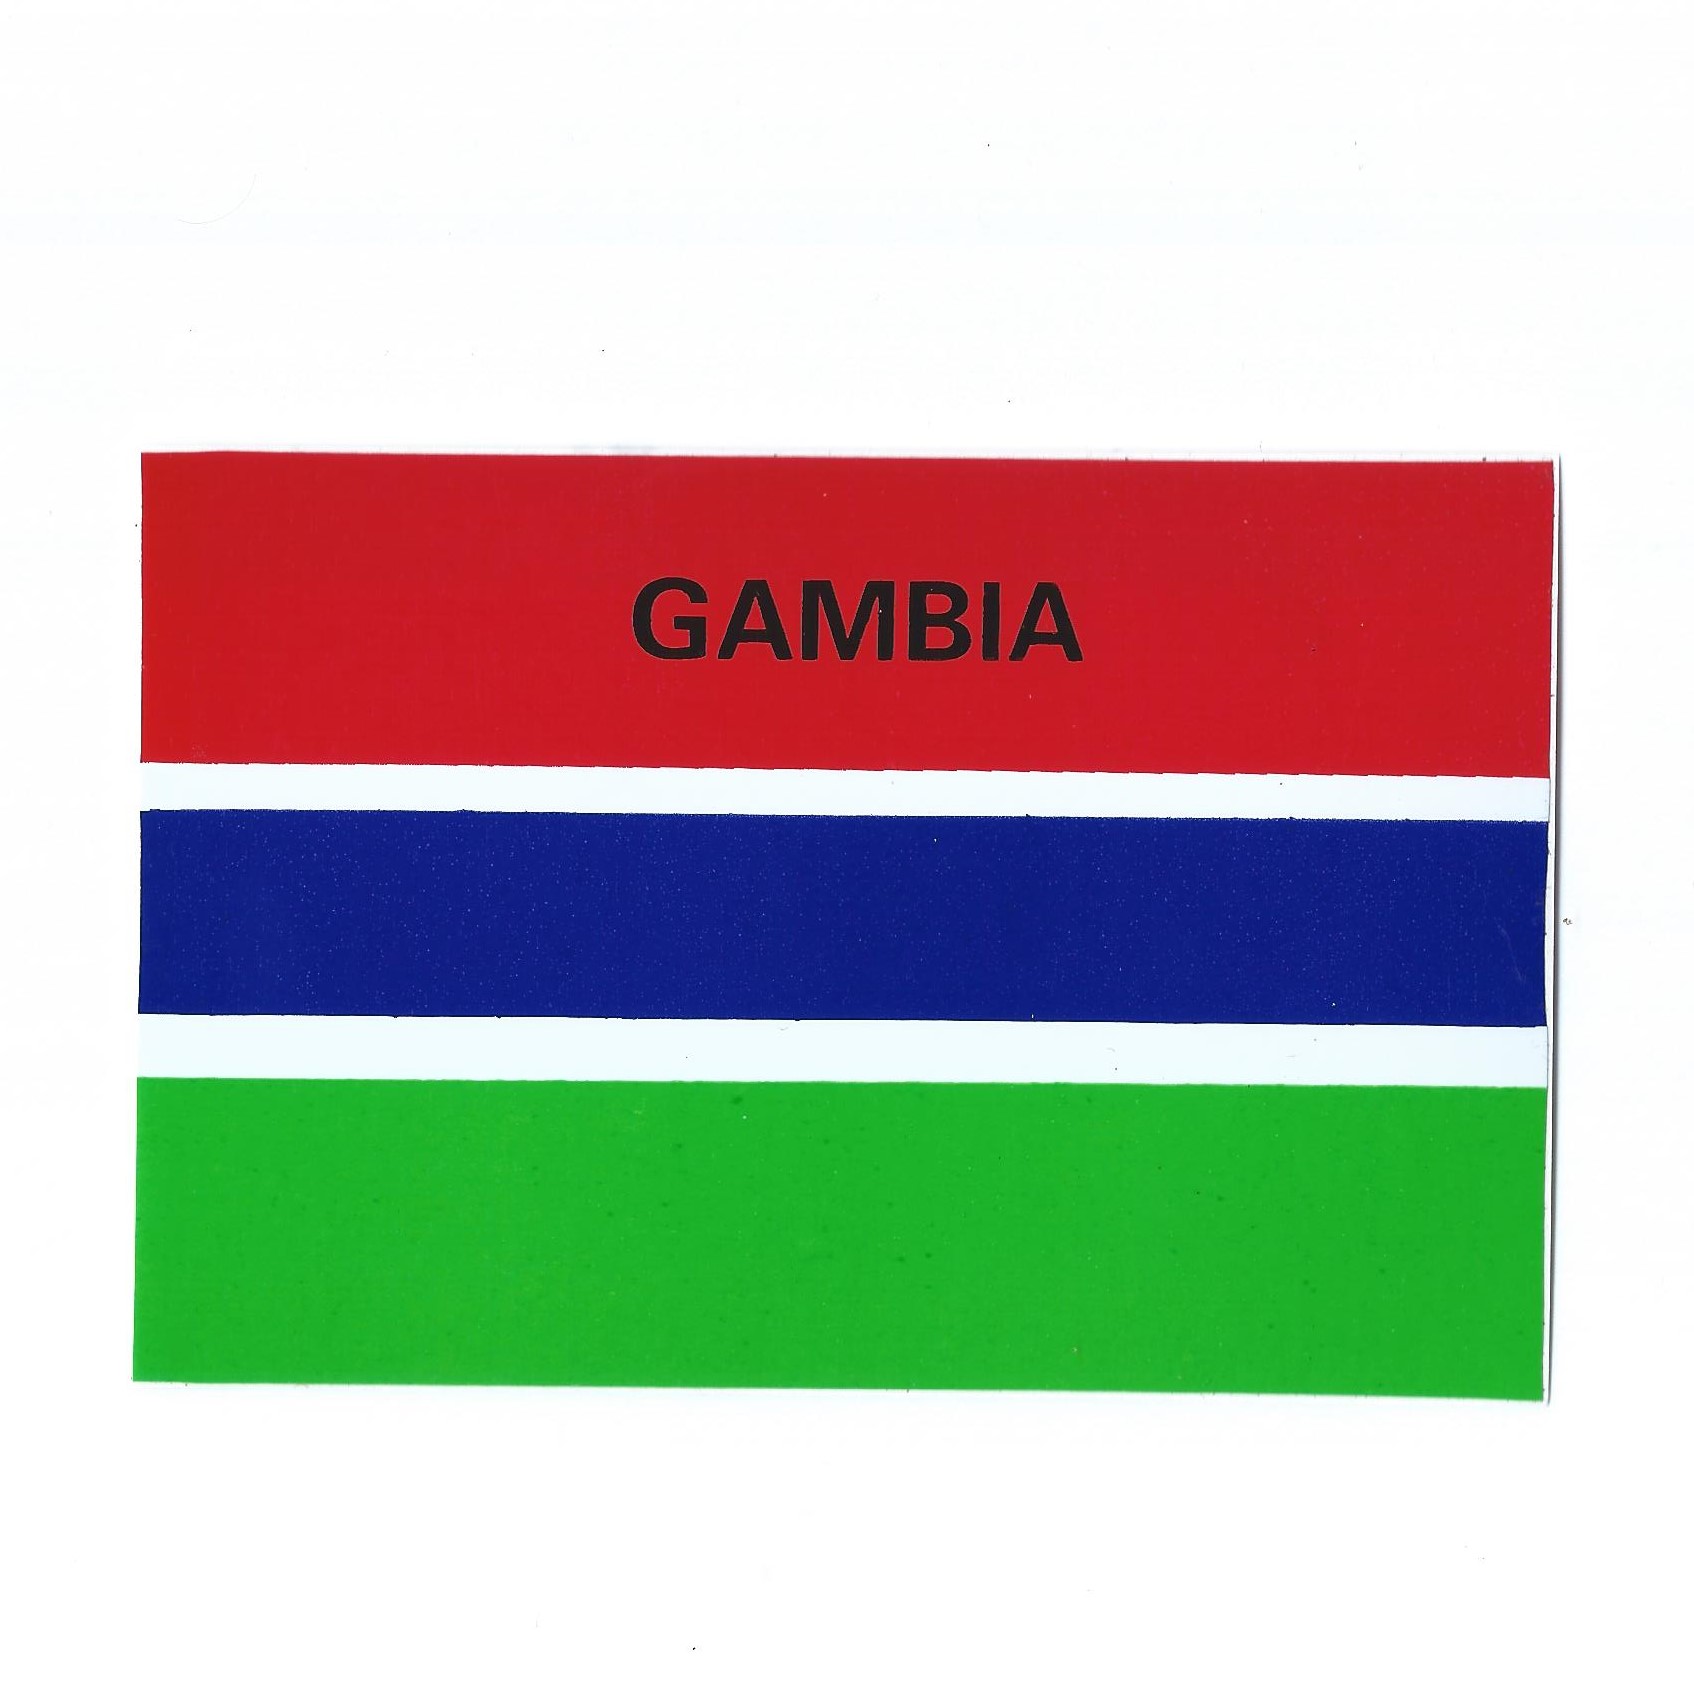 STICKER GAMBIA